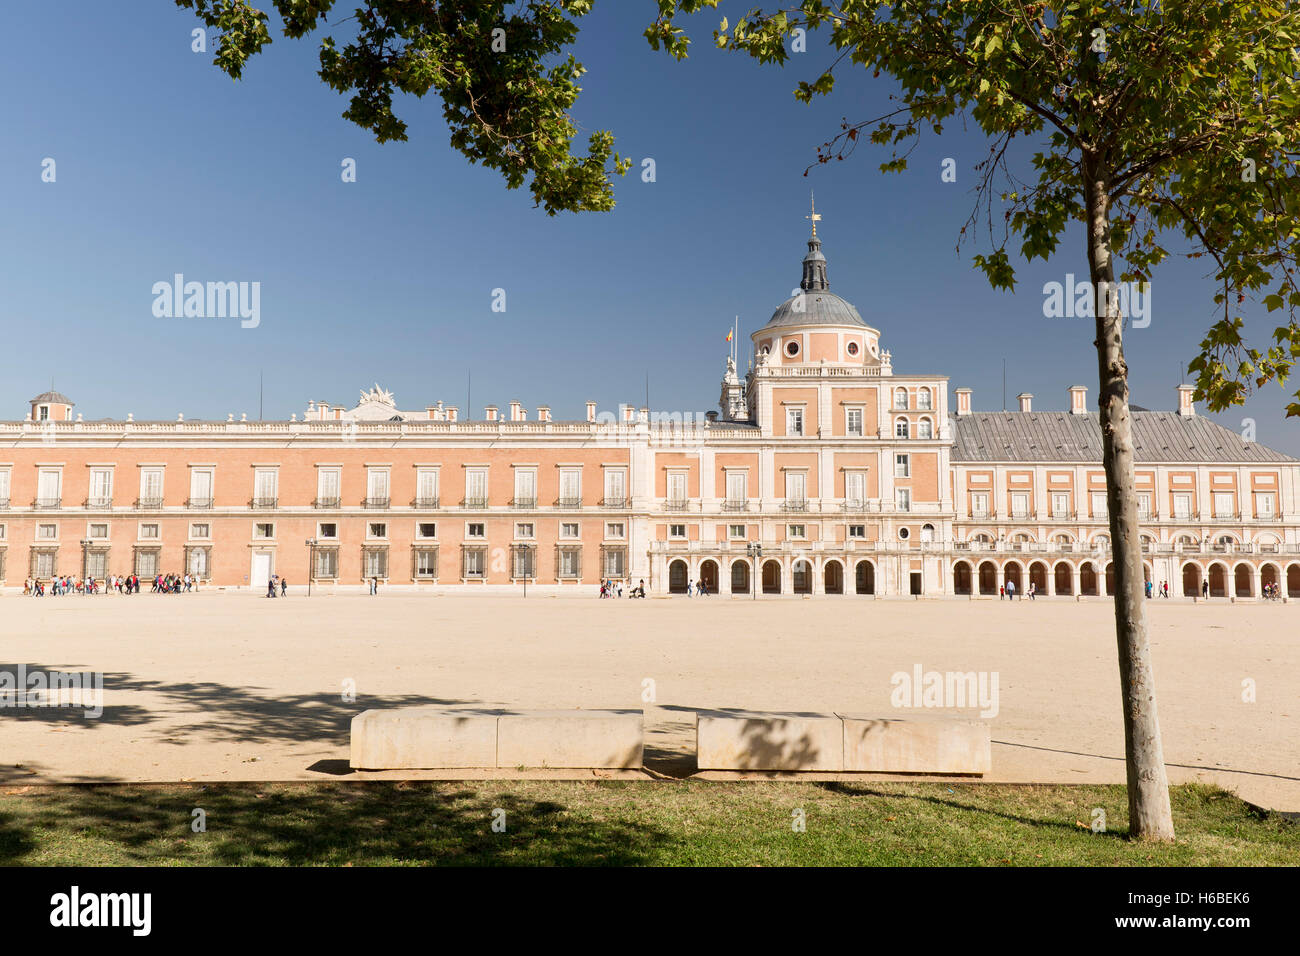 Aranjuez, Madrid, Espagne. 9 octobre 2016 : Palais Royal d'Aranjuez, Madrid, Espagne. Banque D'Images